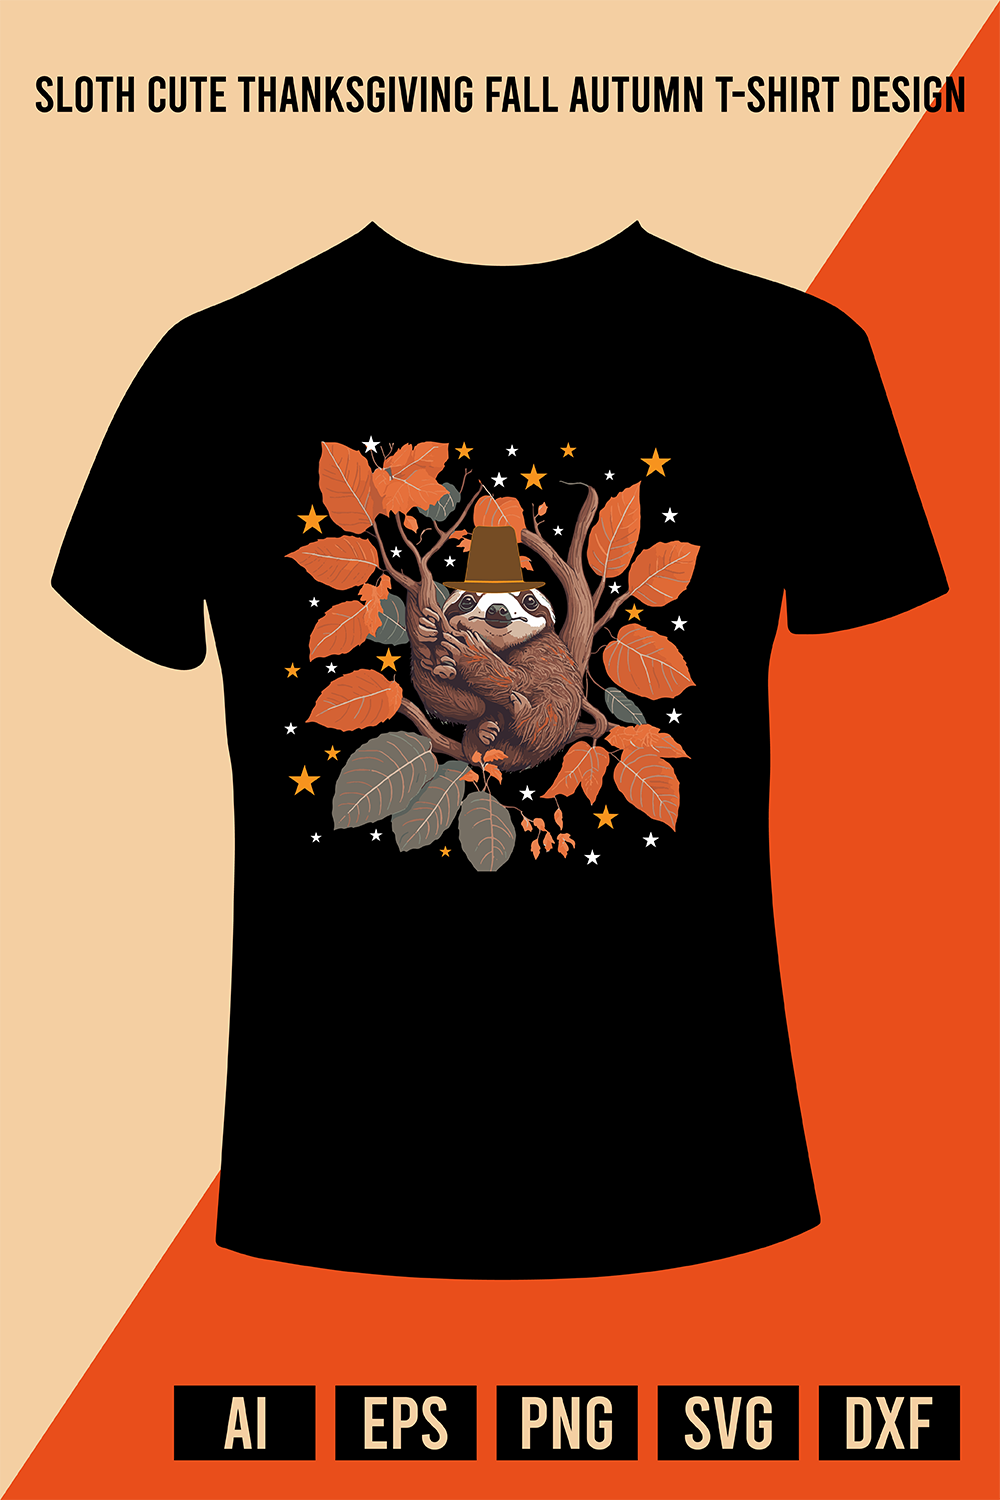 Sloth Cute Thanksgiving Fall Autumn T-Shirt Design pinterest preview image.